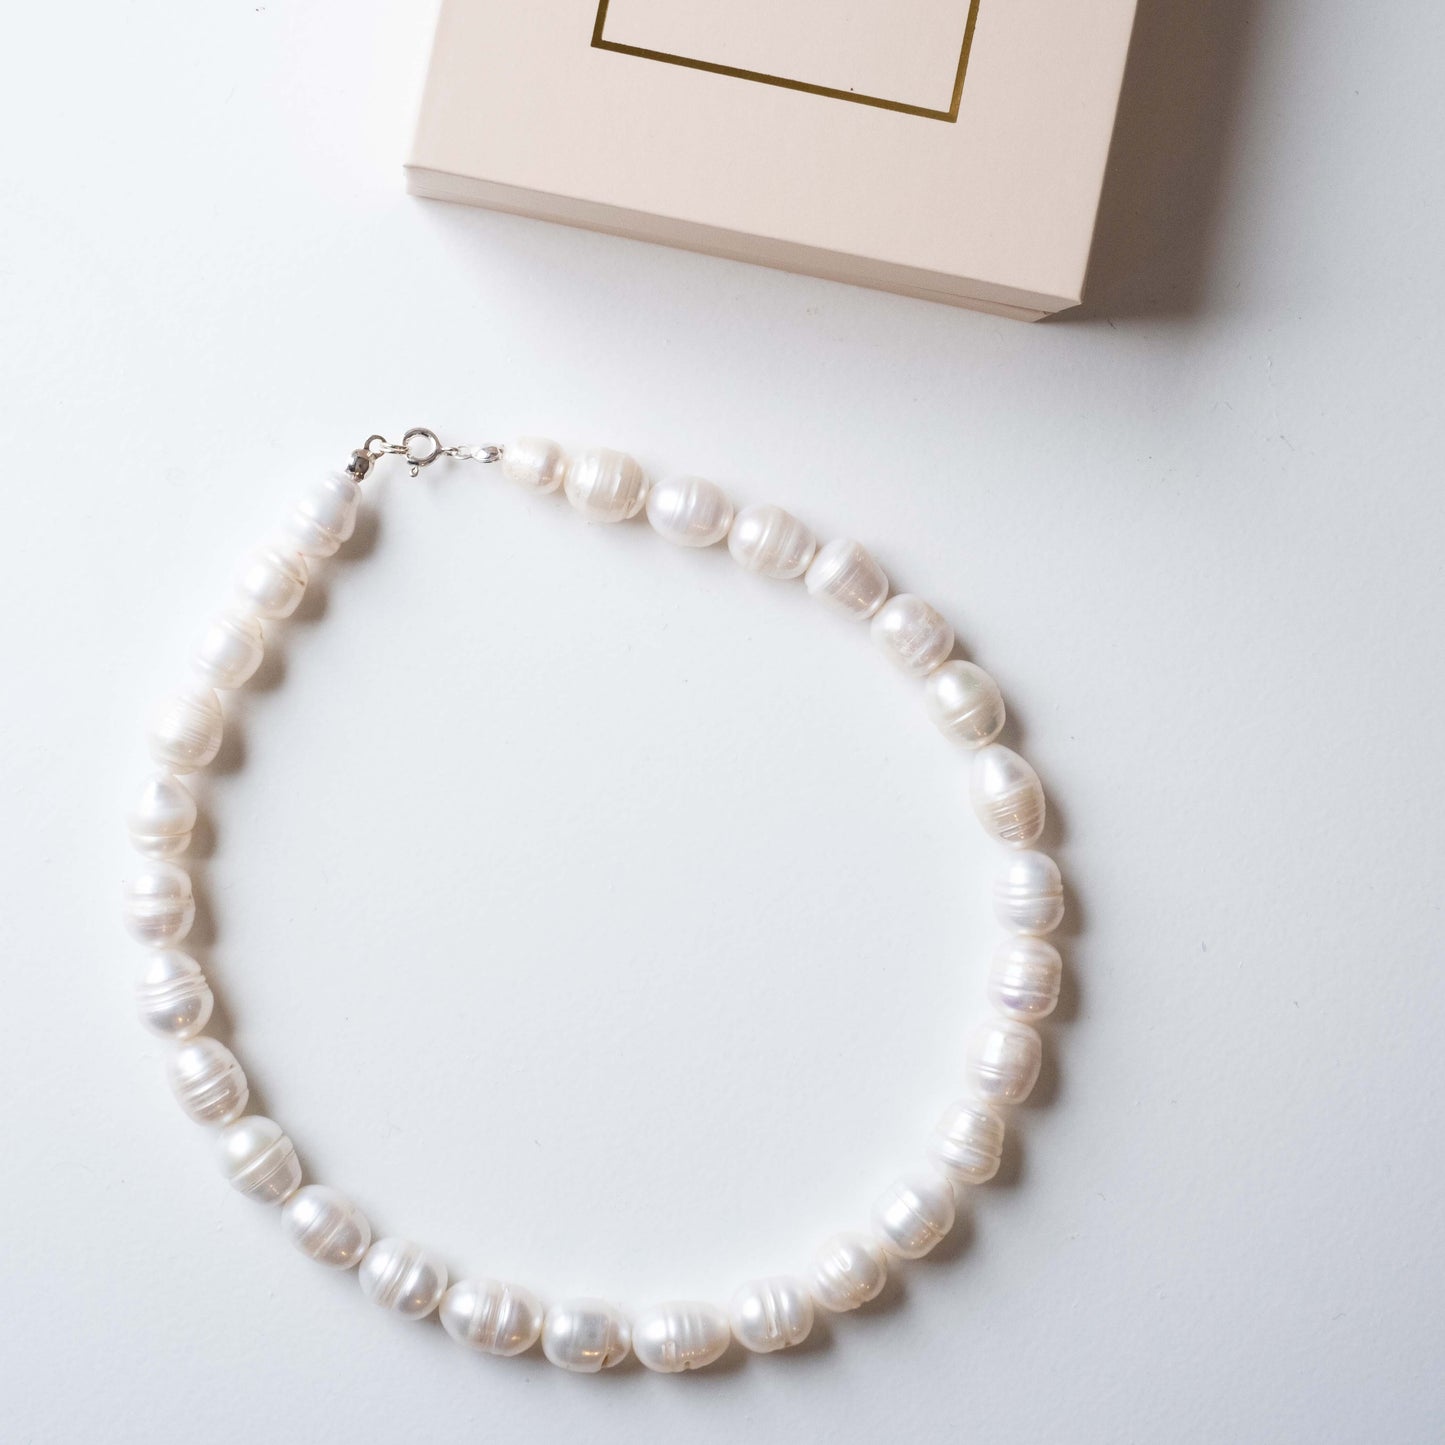 Natural "Huge" pearl necklace, 11-13mm